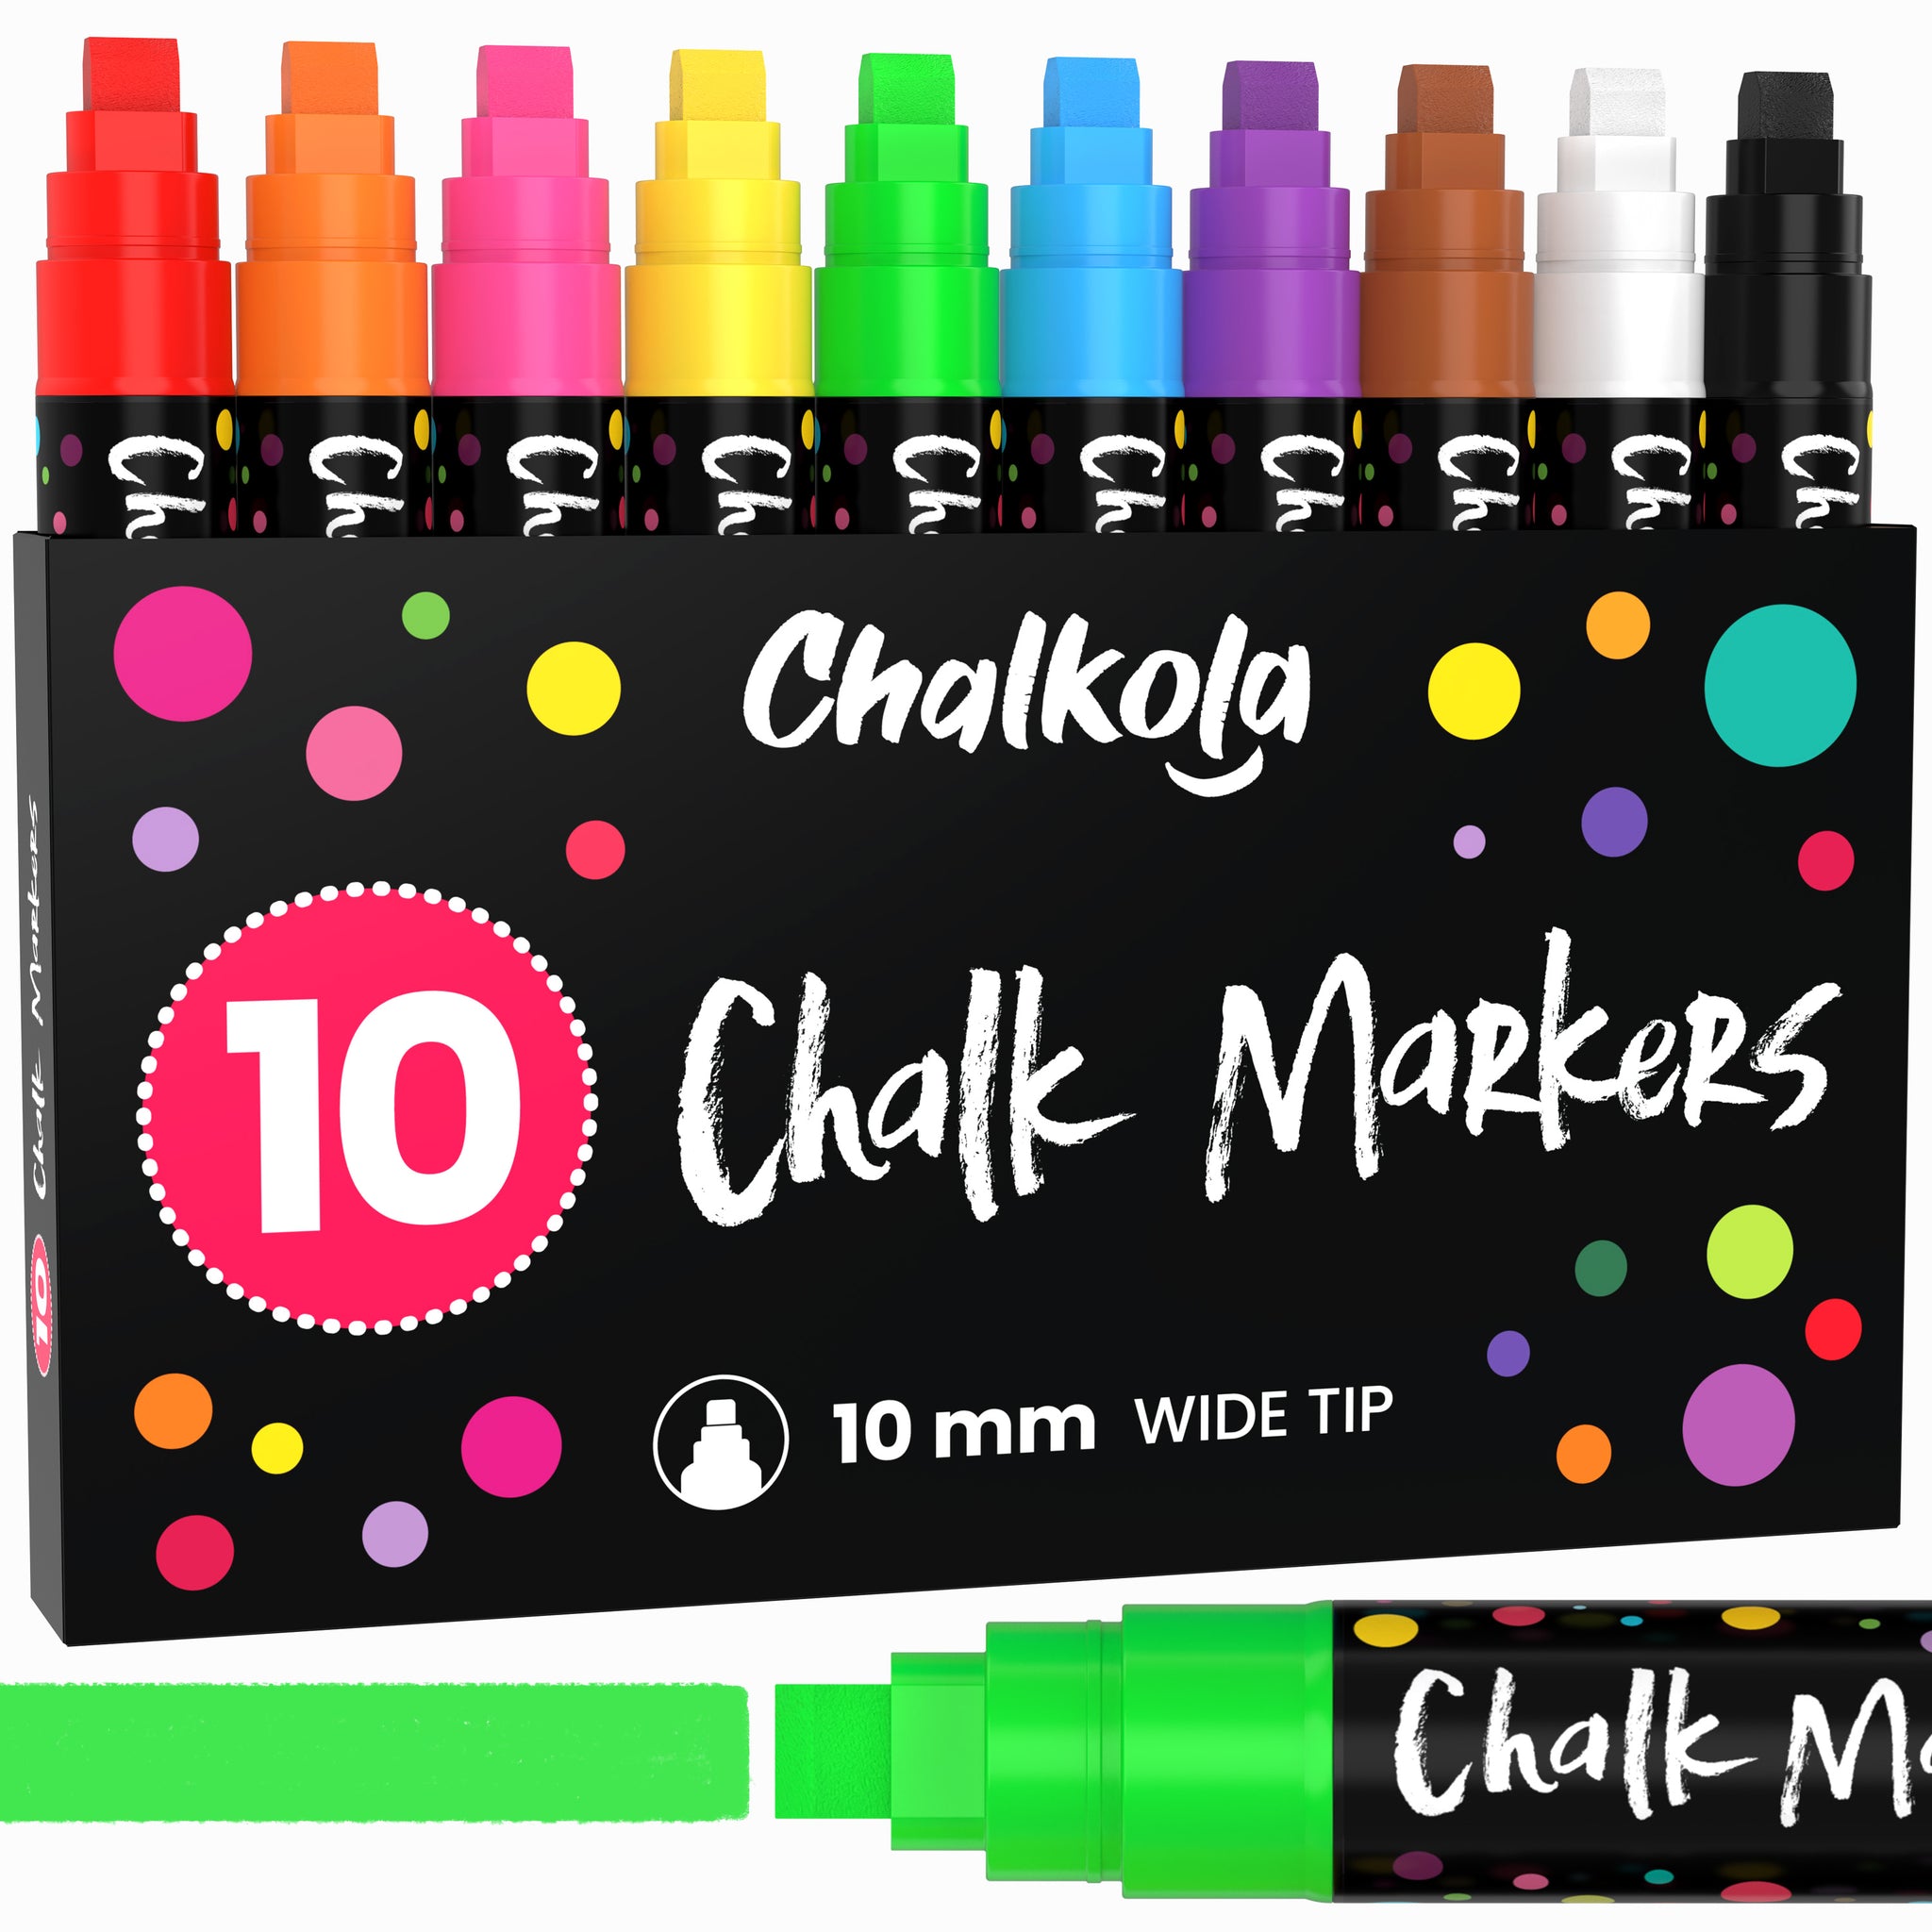 5 Black Chalkboard Chalk Markers - Black Dry Erase Markers for Blackboard, Chalkboard Signs, Windows, Glass | Variety Pack - Fine & Jumbo Size Ink